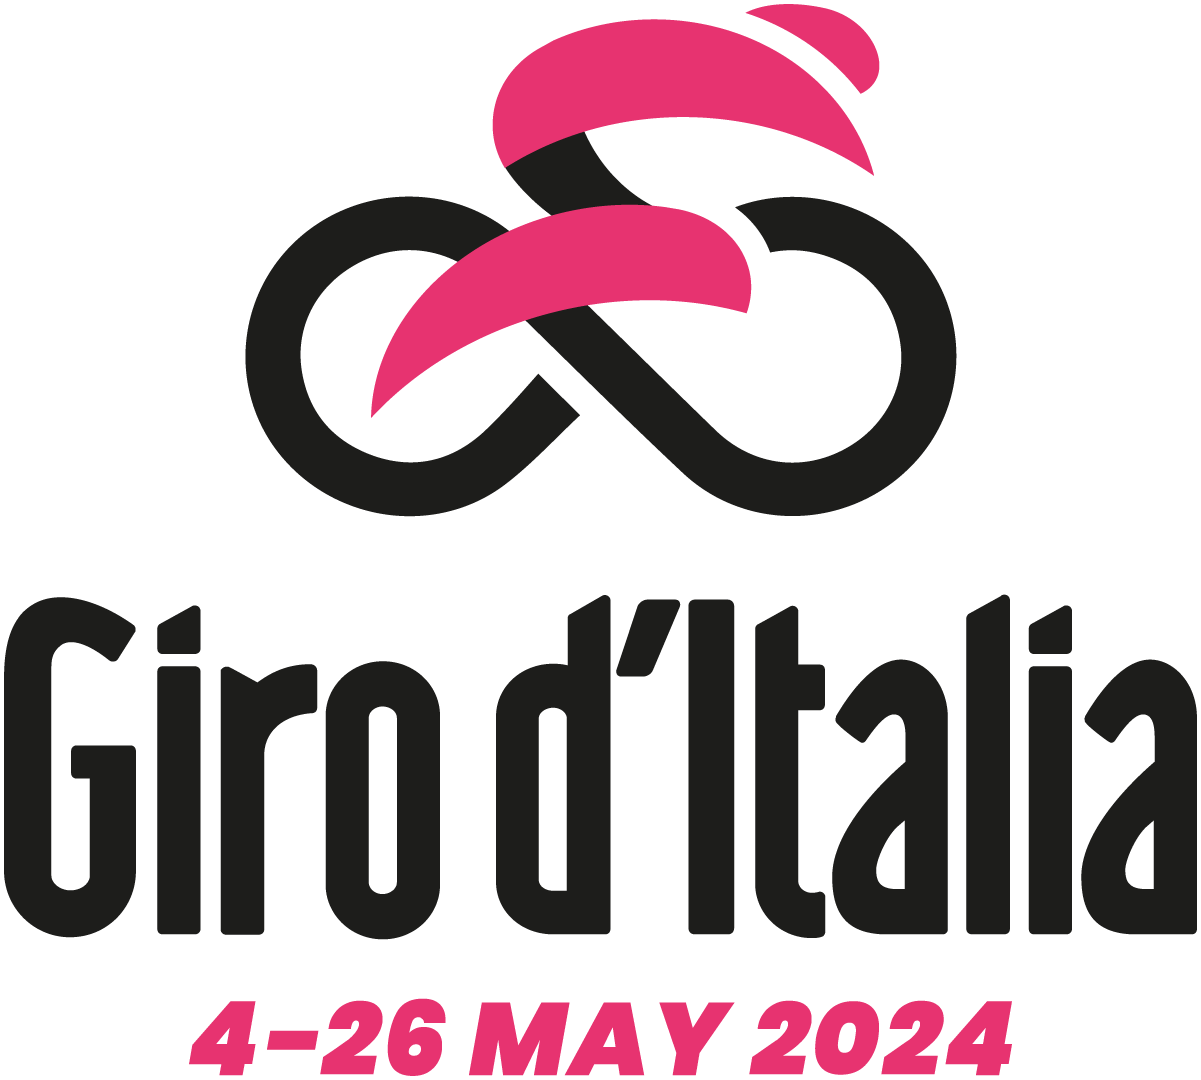 The dates of the Giro d'Italia Saturday 4 May 2024 to Sunday 26 May.